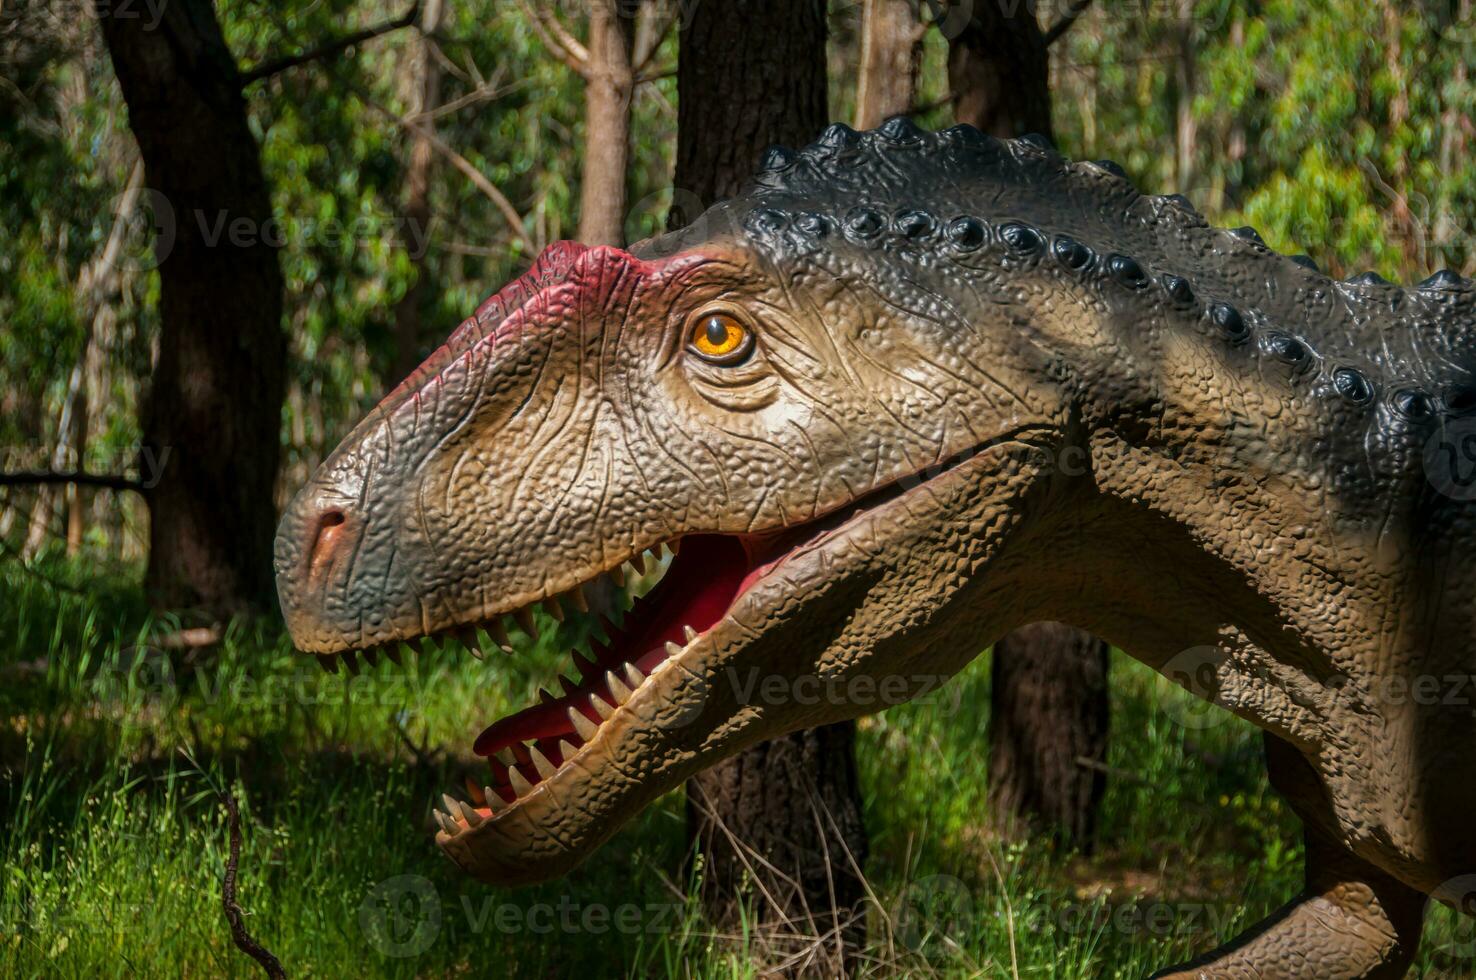 Dino Parque, dinosaur theme park in Lourinha, Portugal photo